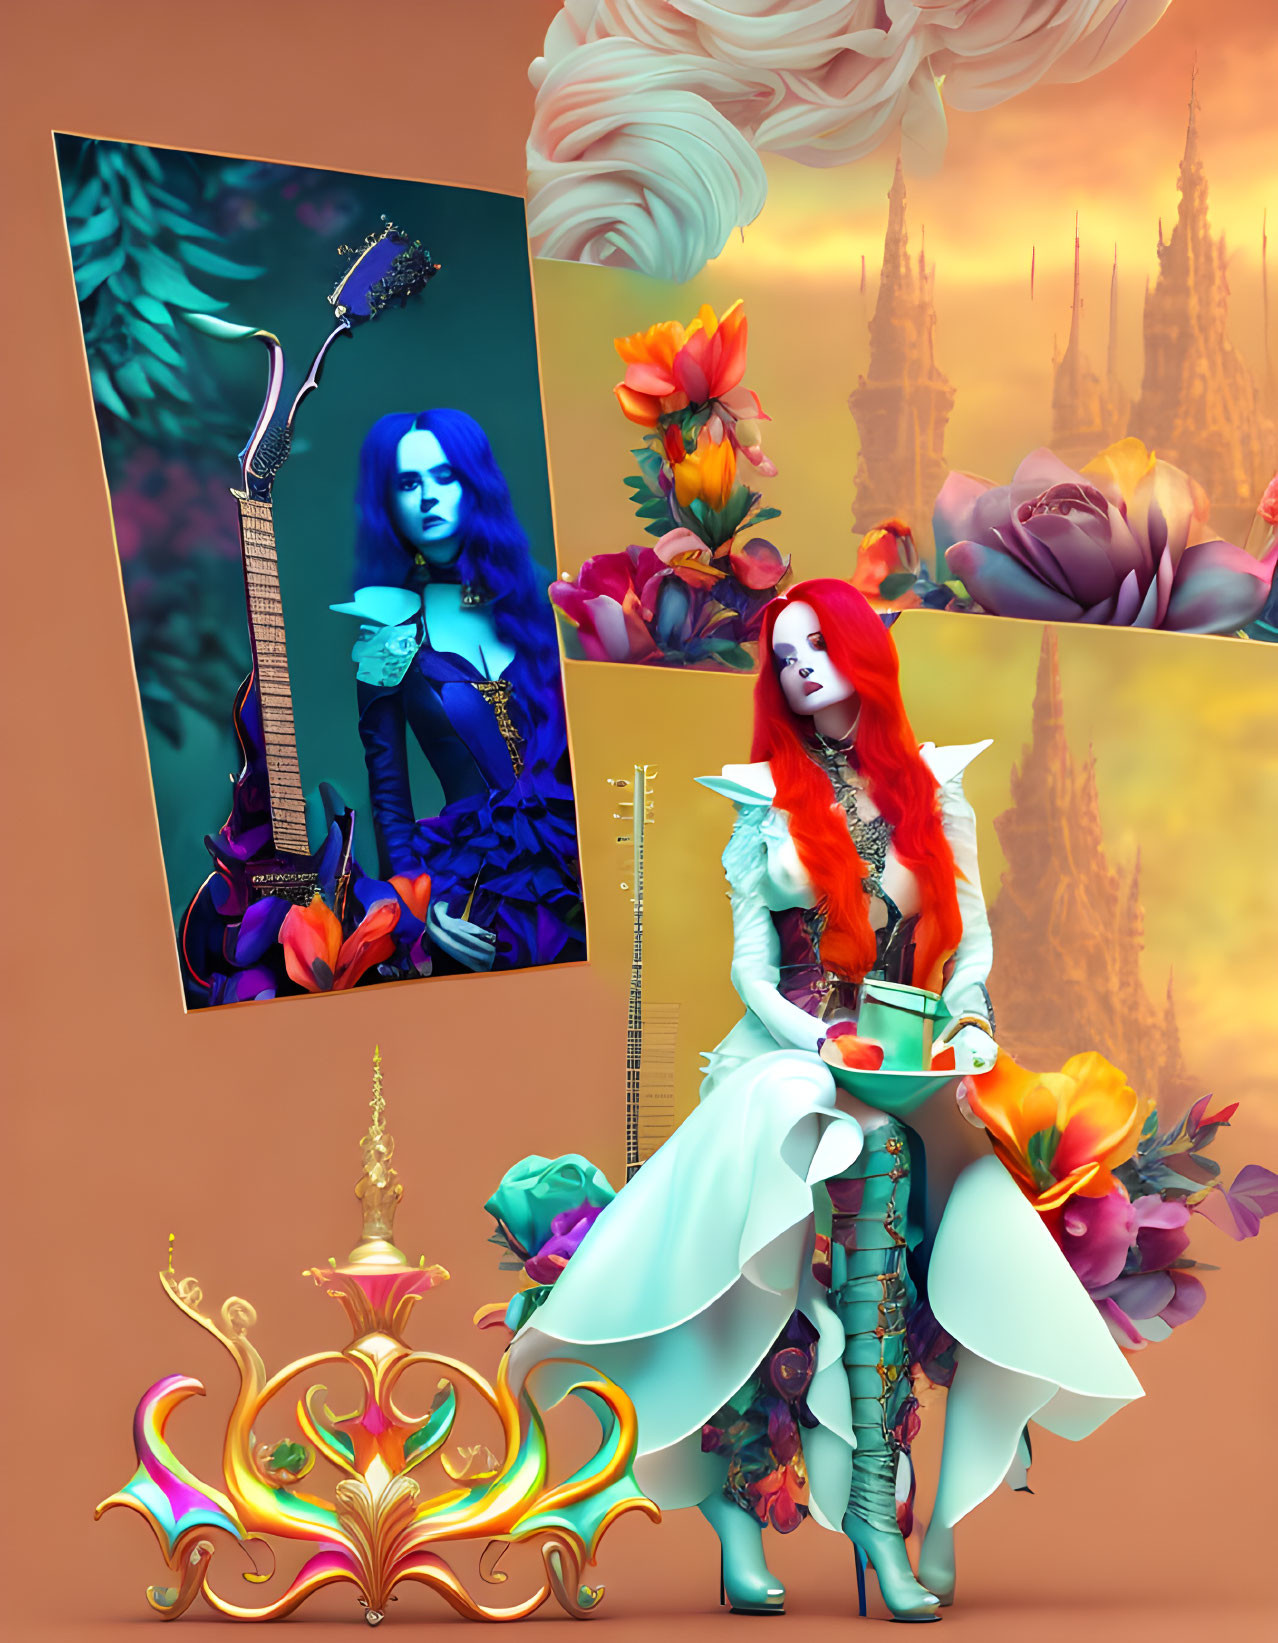 Colorful surrealist artwork: Two women, vibrant hair, flowers, guitar, cityscape